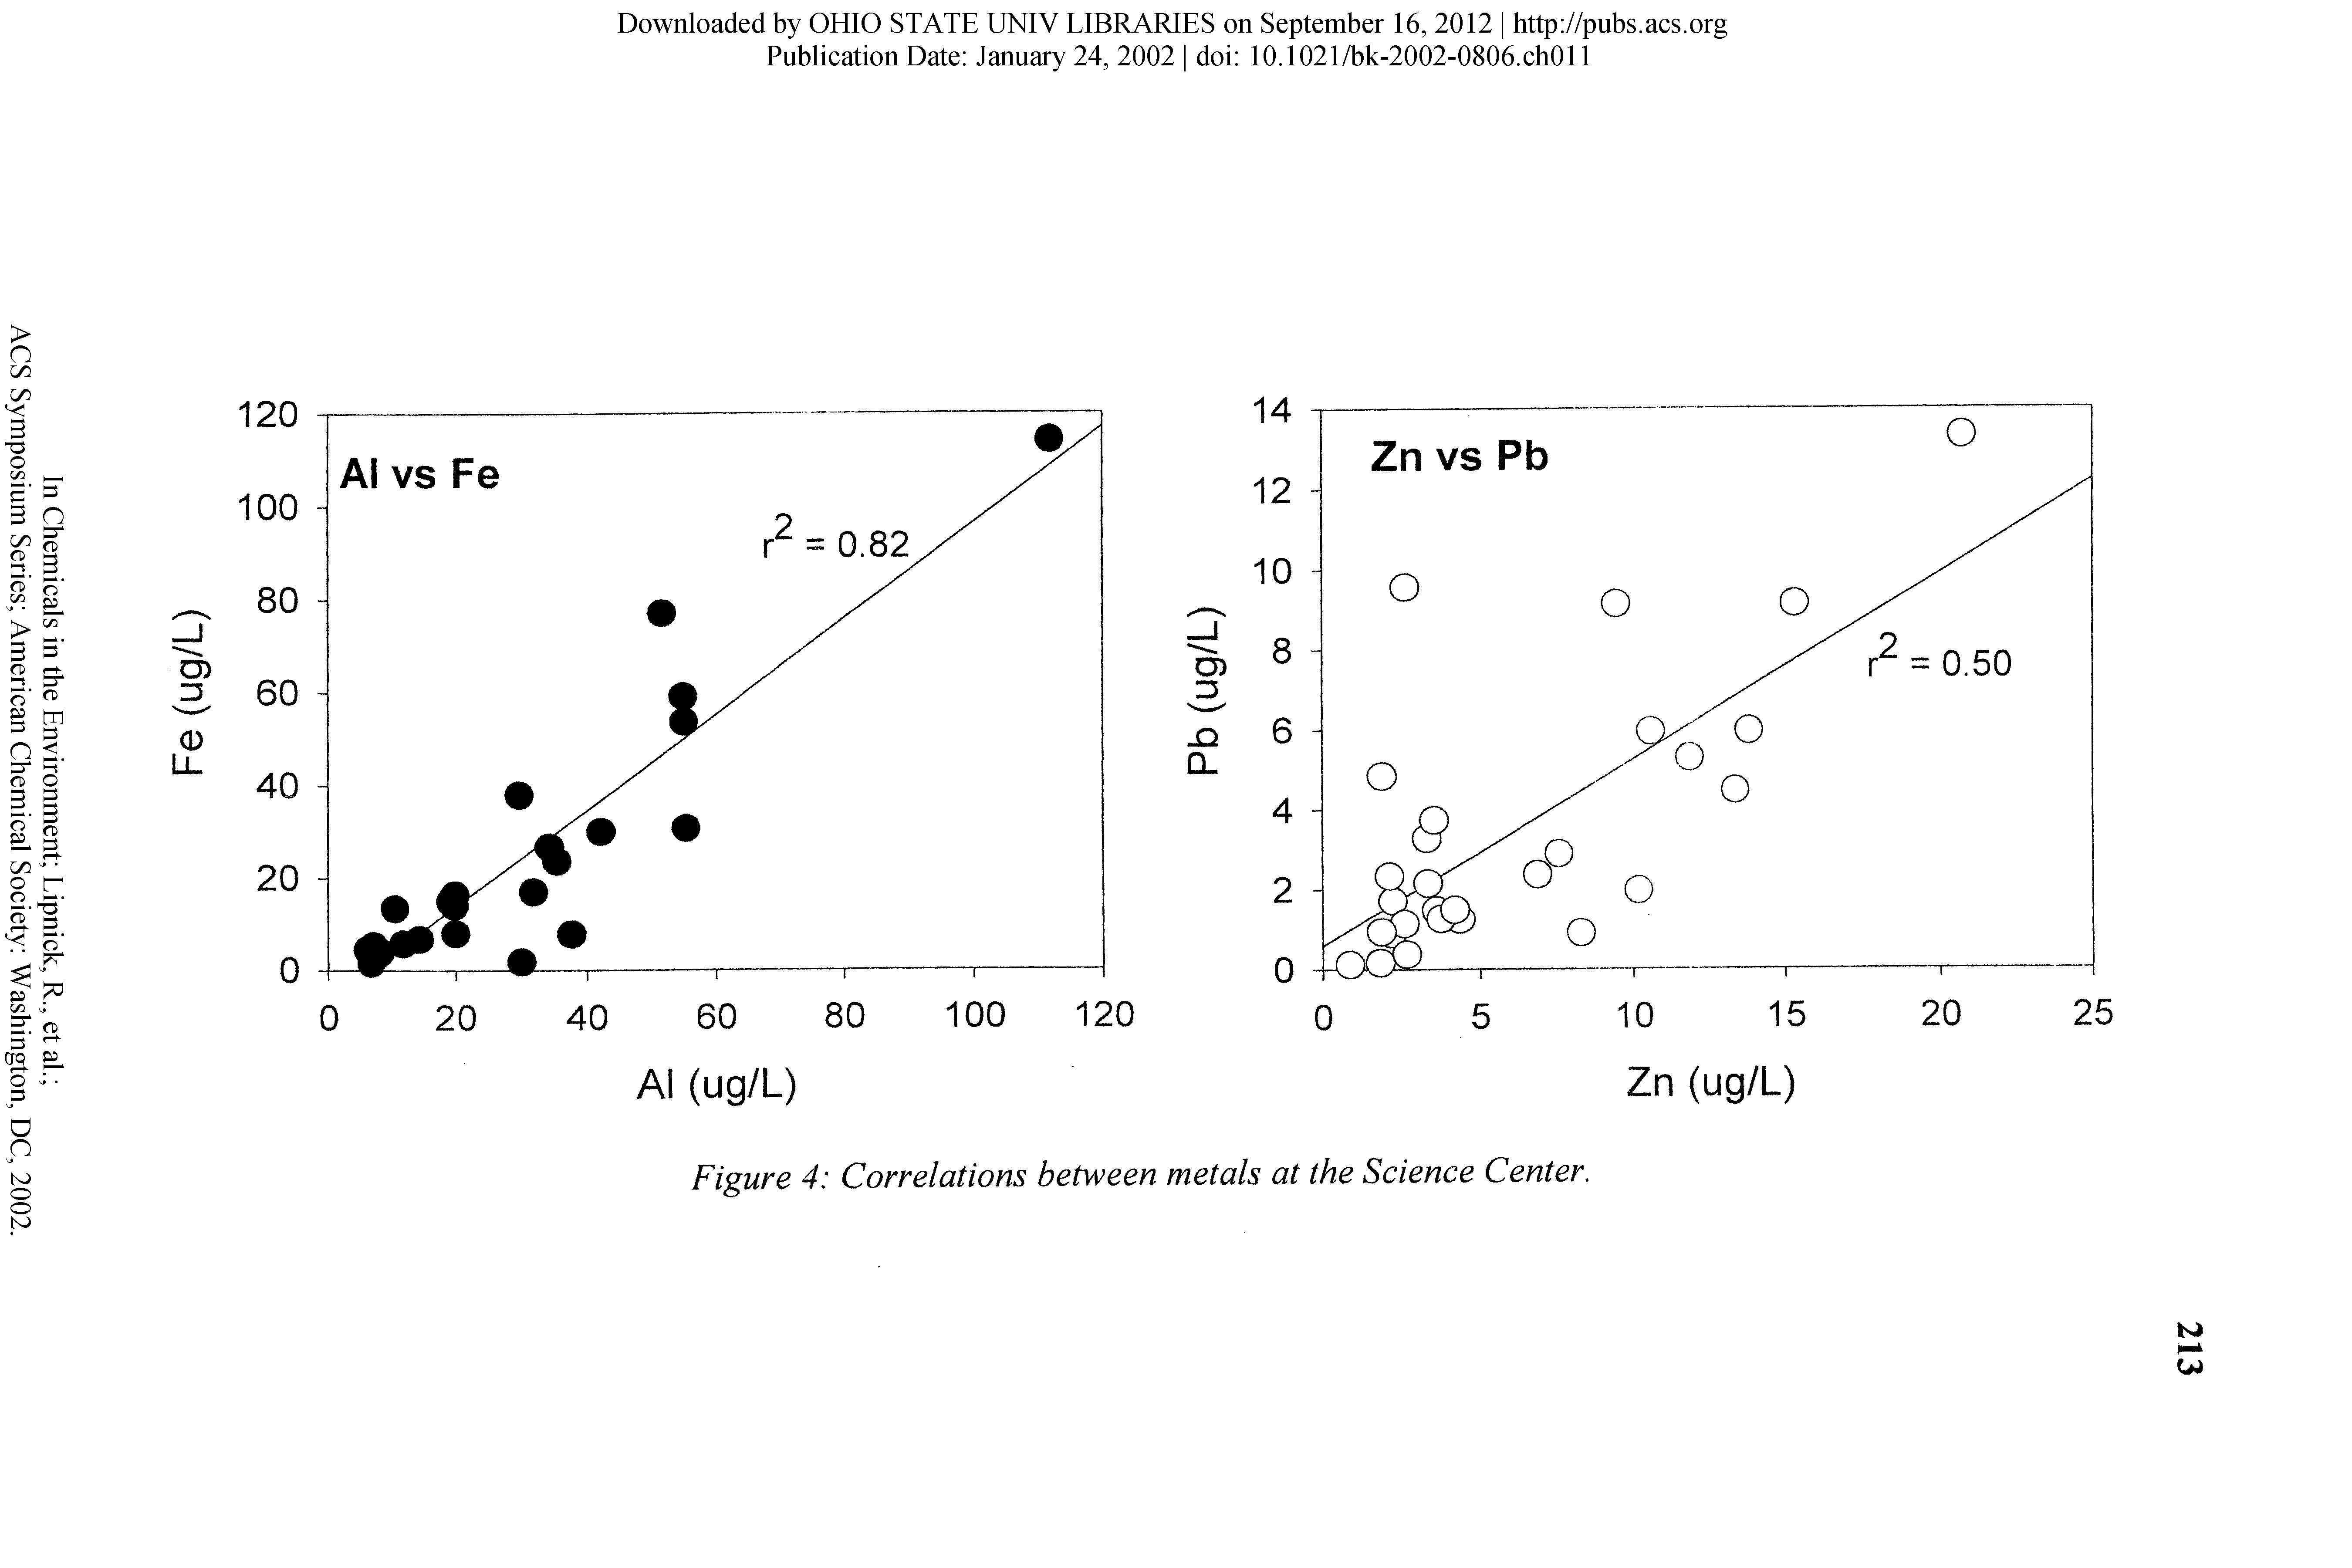 Figure 4 Correlations between metals at the Science Center.